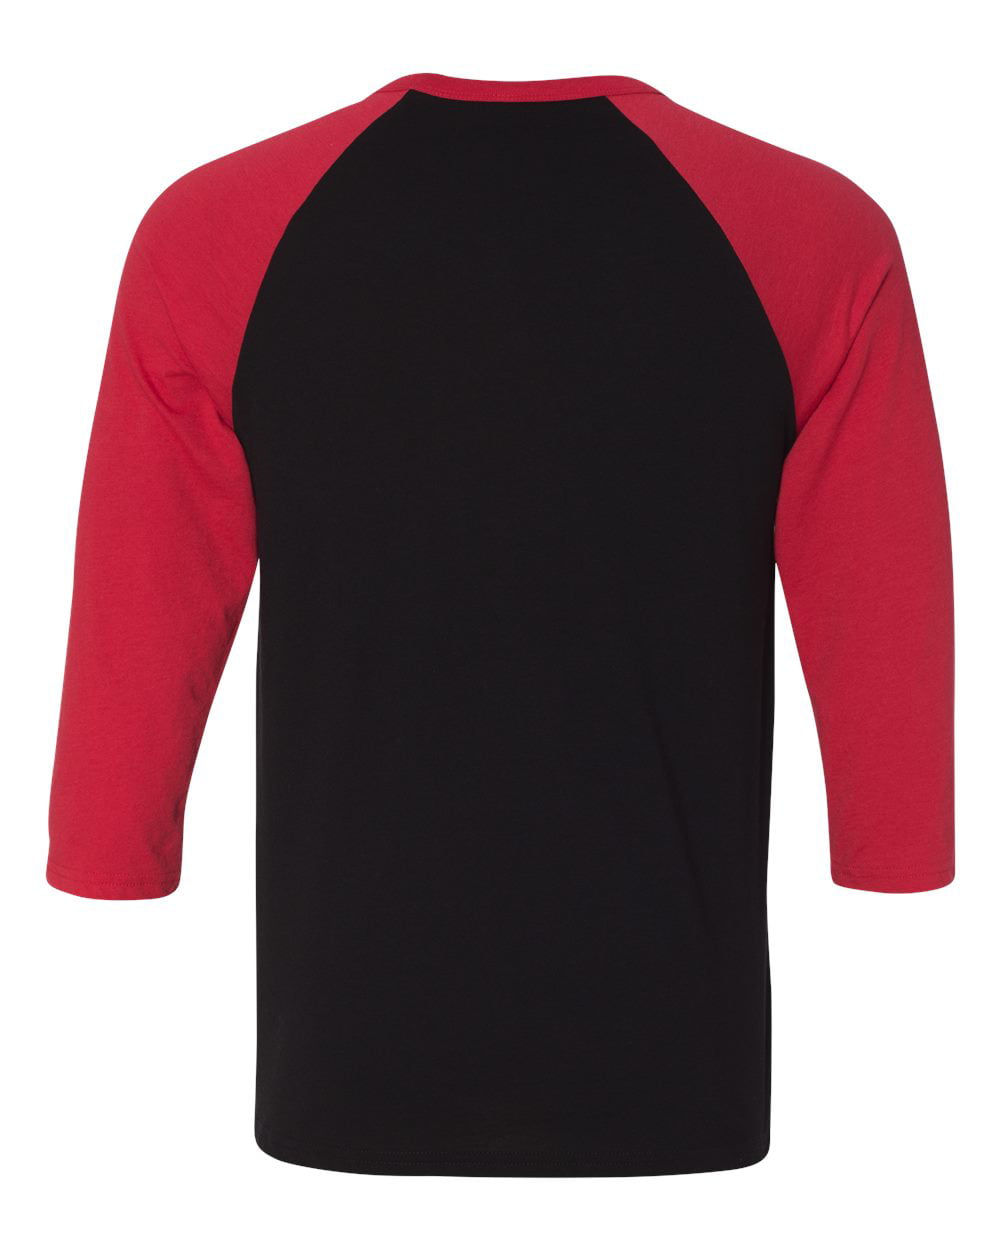 red and black raglan shirt